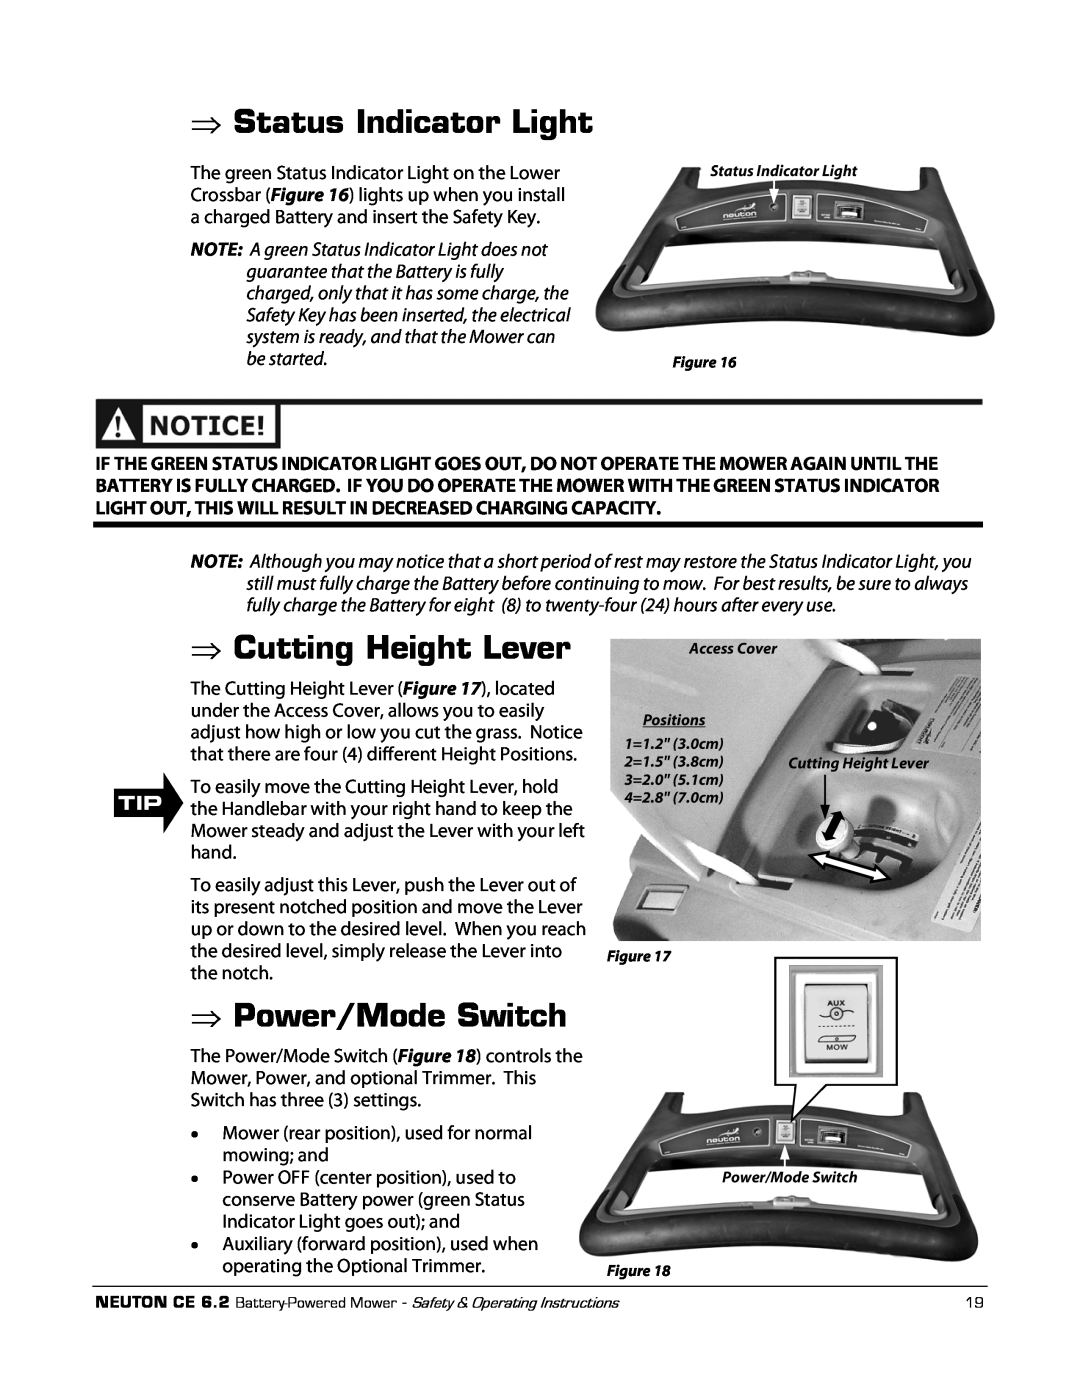 Neuton CE 6.2 manual ⇒Status Indicator Light, ⇒Cutting Height Lever, ⇒Power/Mode Switch 